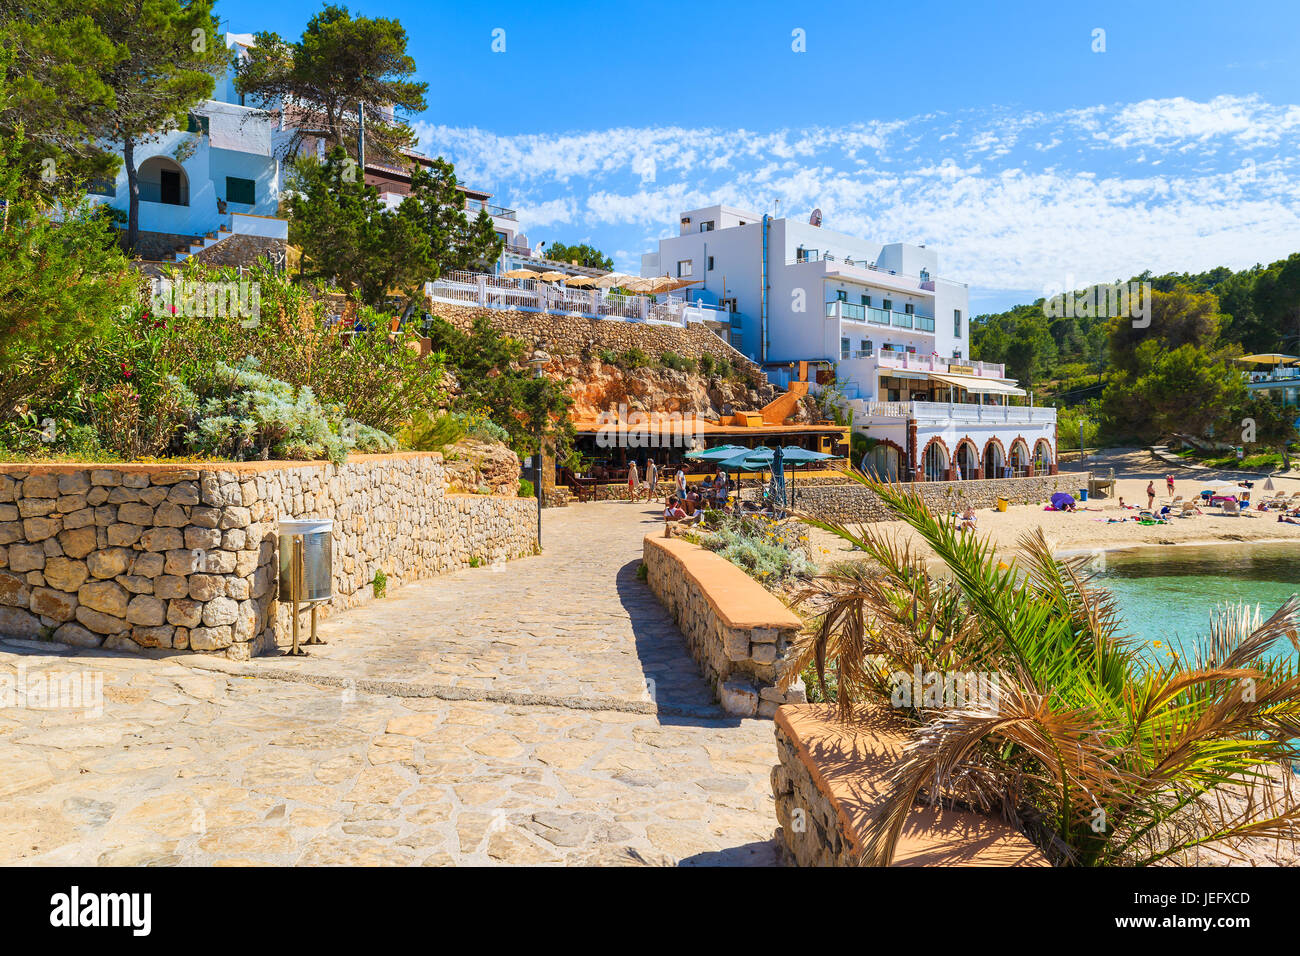 CALA PORTINATX BAY, IBIZA ISLAND - MAY 22, 2017: View of coastal promenade and hotels with restaurants in Cala Portinatx bay, Ibiza island, Spain. Stock Photo